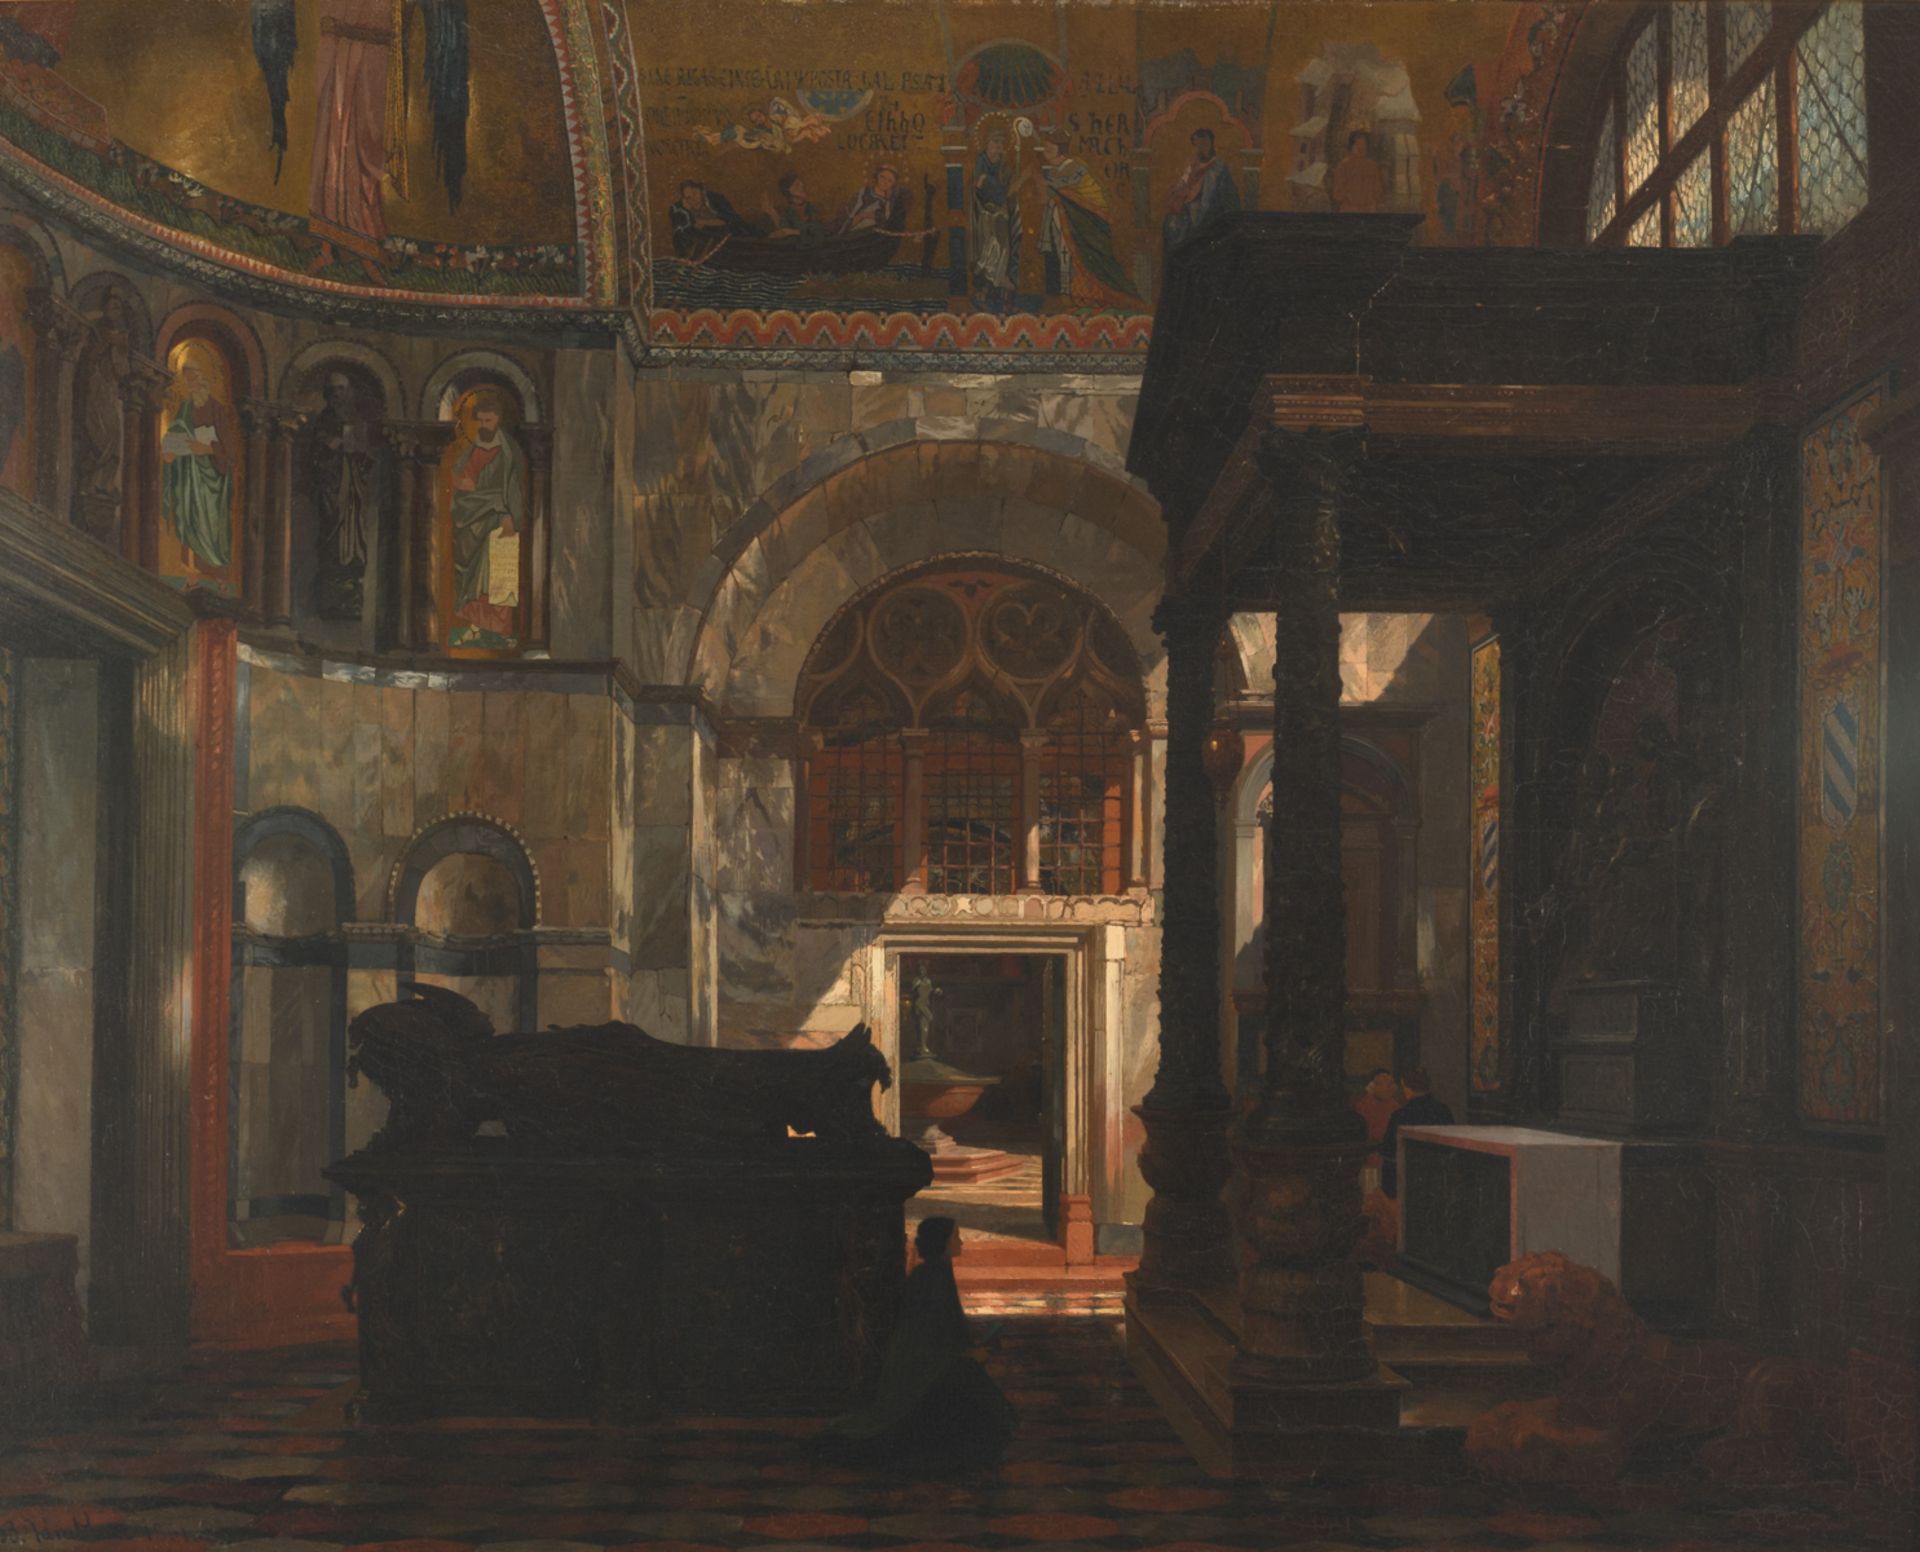 Van Moer G.B., The Saint Zeno chapel in the basilica San Marco Venice, oil on canvas, 122 x 98 cm